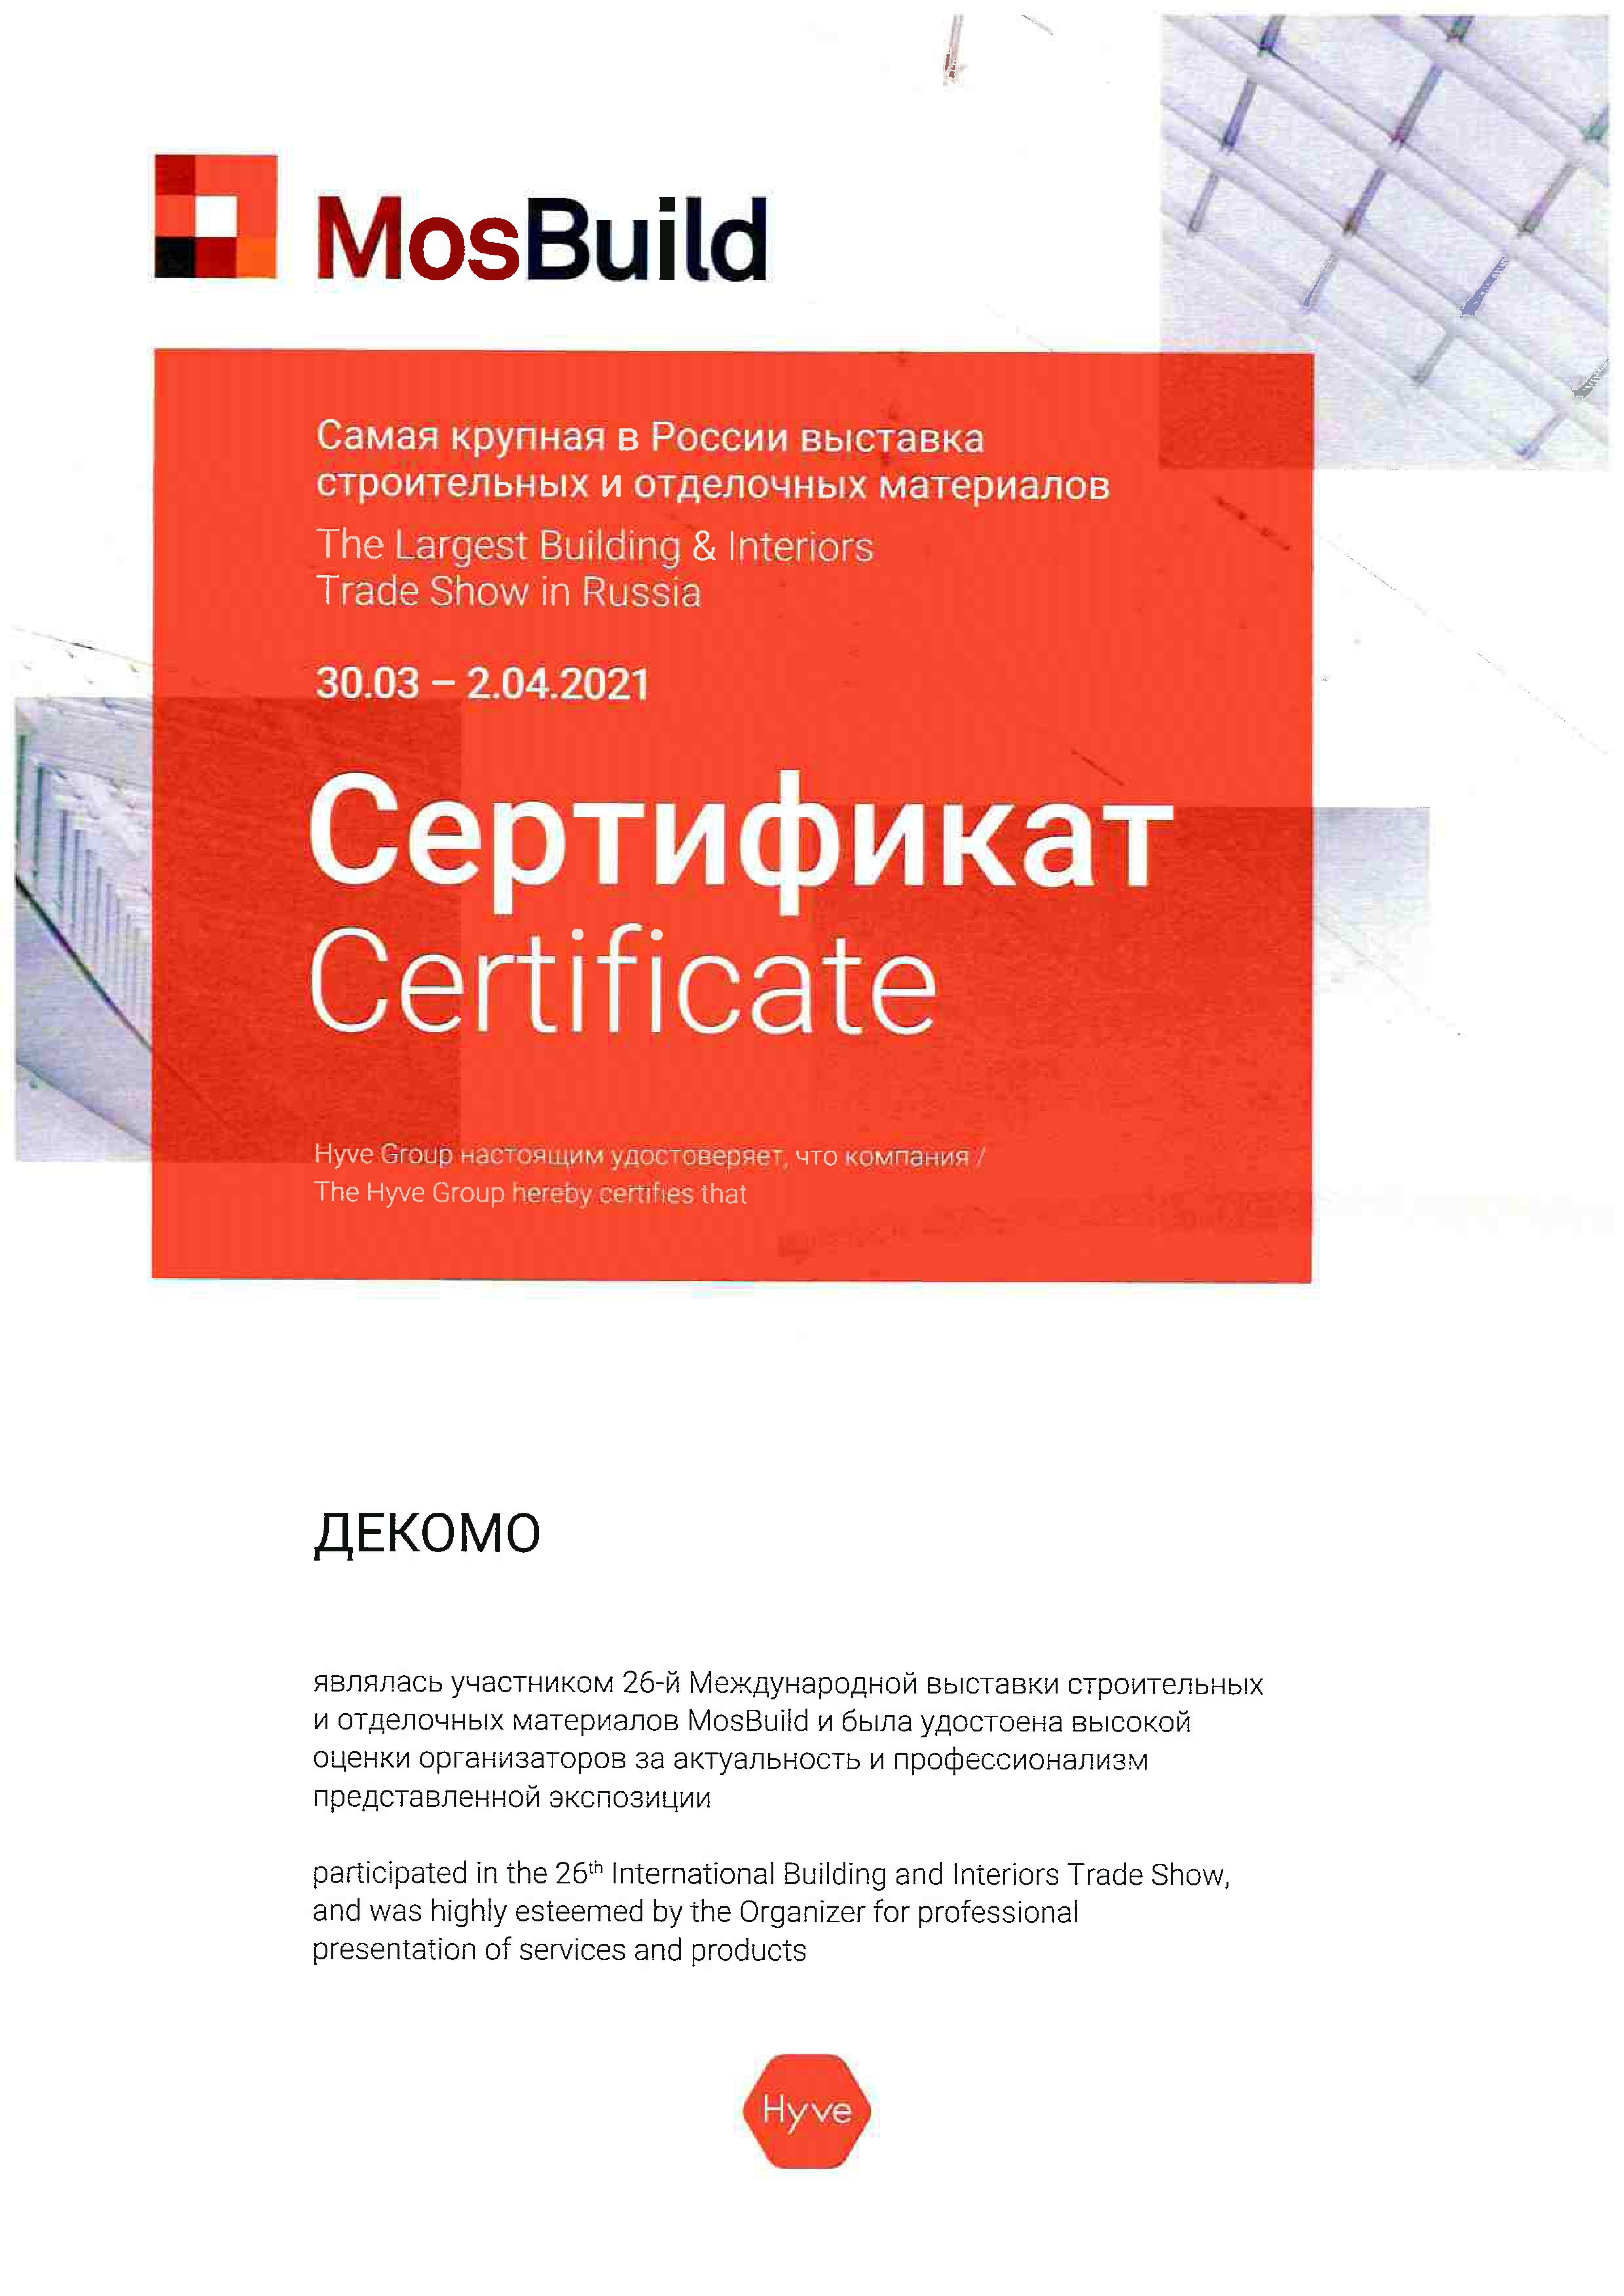 Сертификат MosBuild 2021